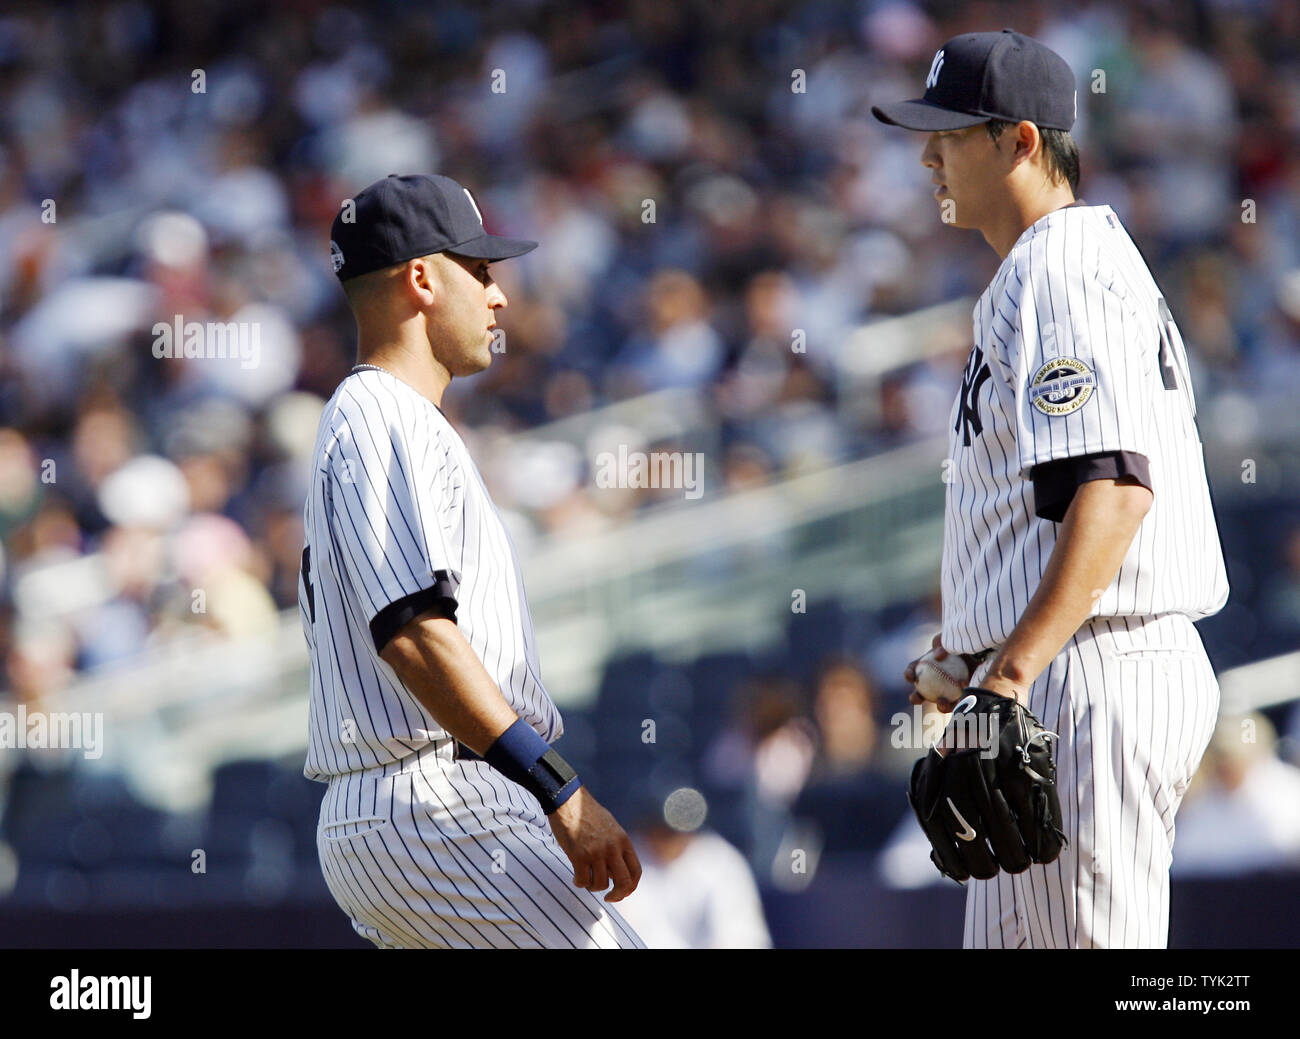 Chien-Ming Wang - New York Yankees - Taiwan - The New York Times